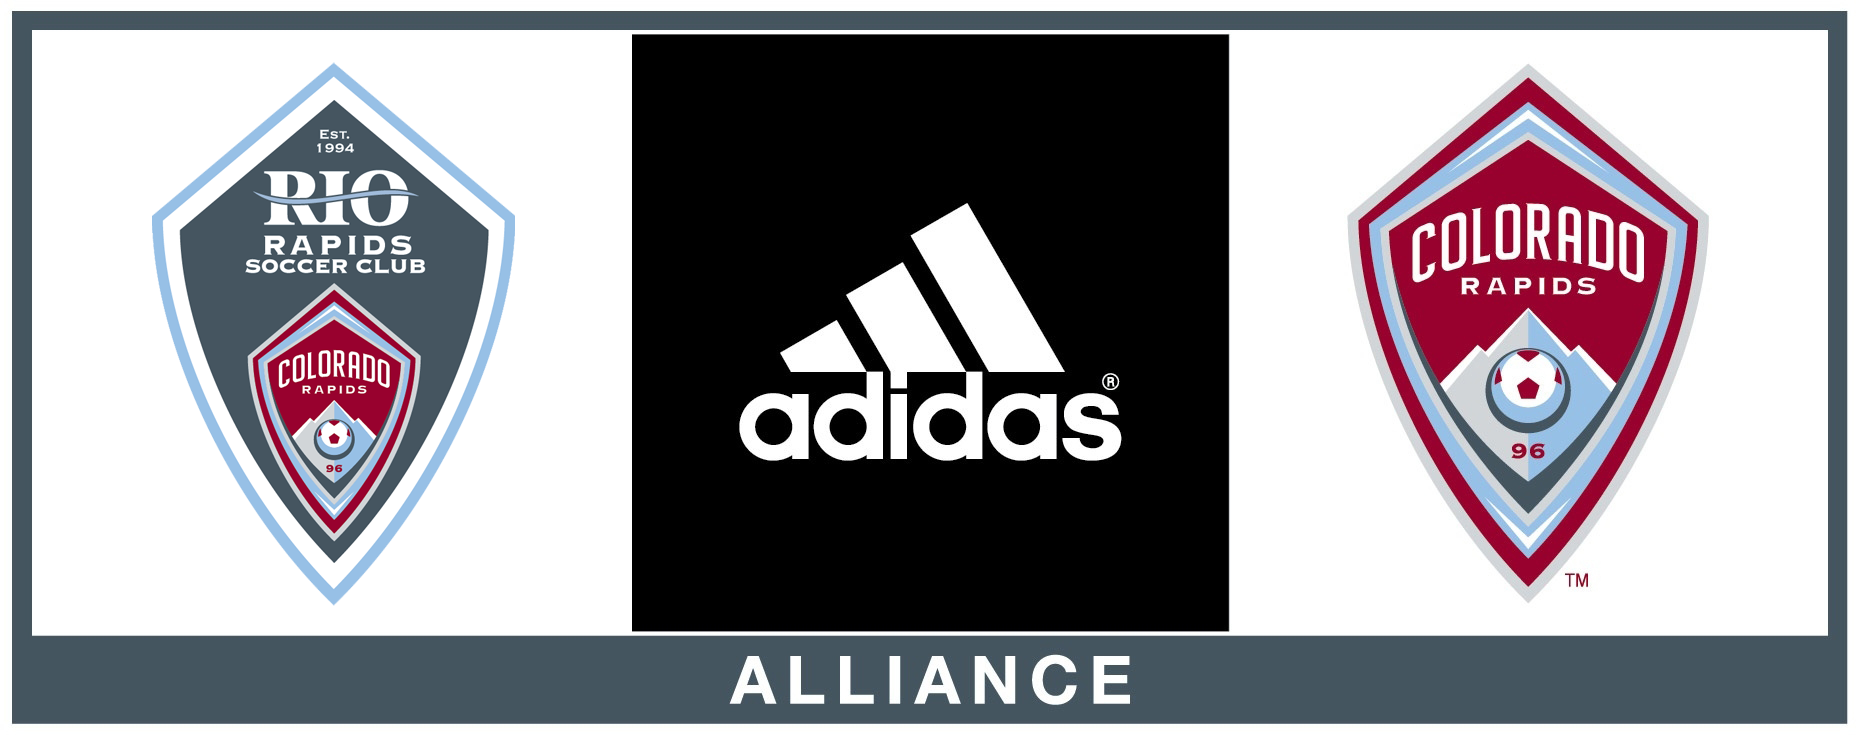 RRSC Adidas Alliance Graphic